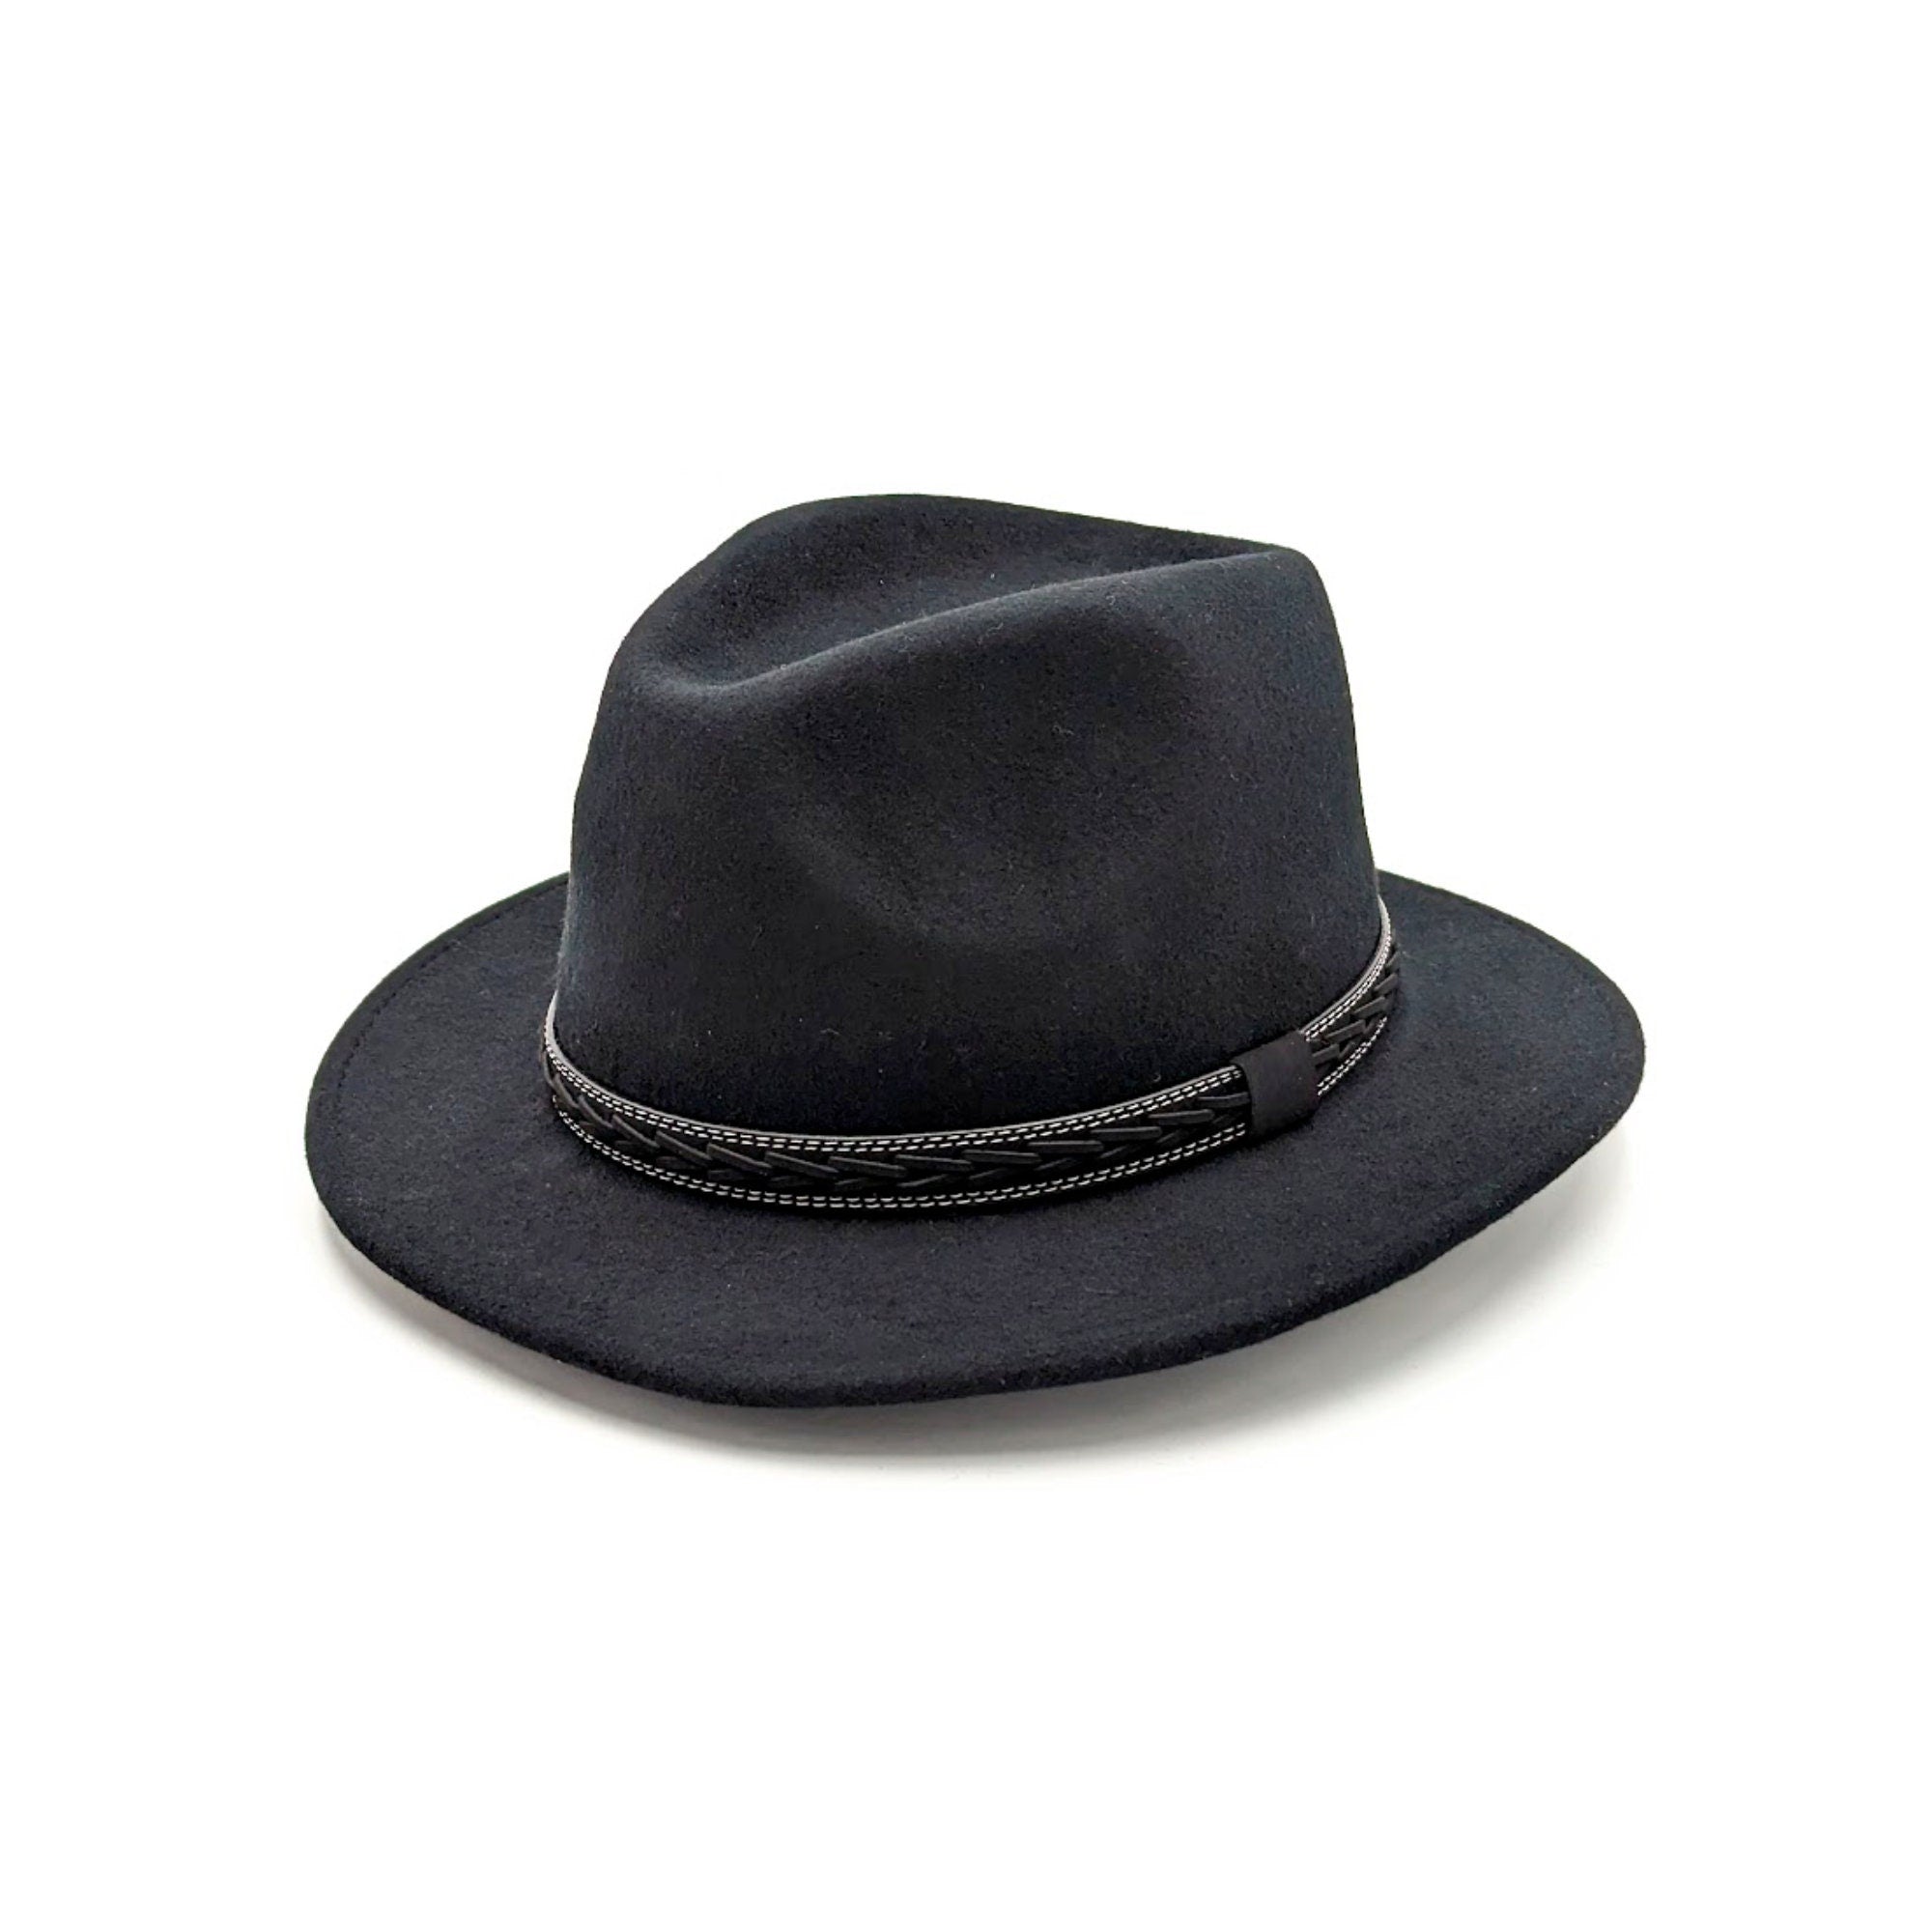 Black Fedora Hat Mid brim